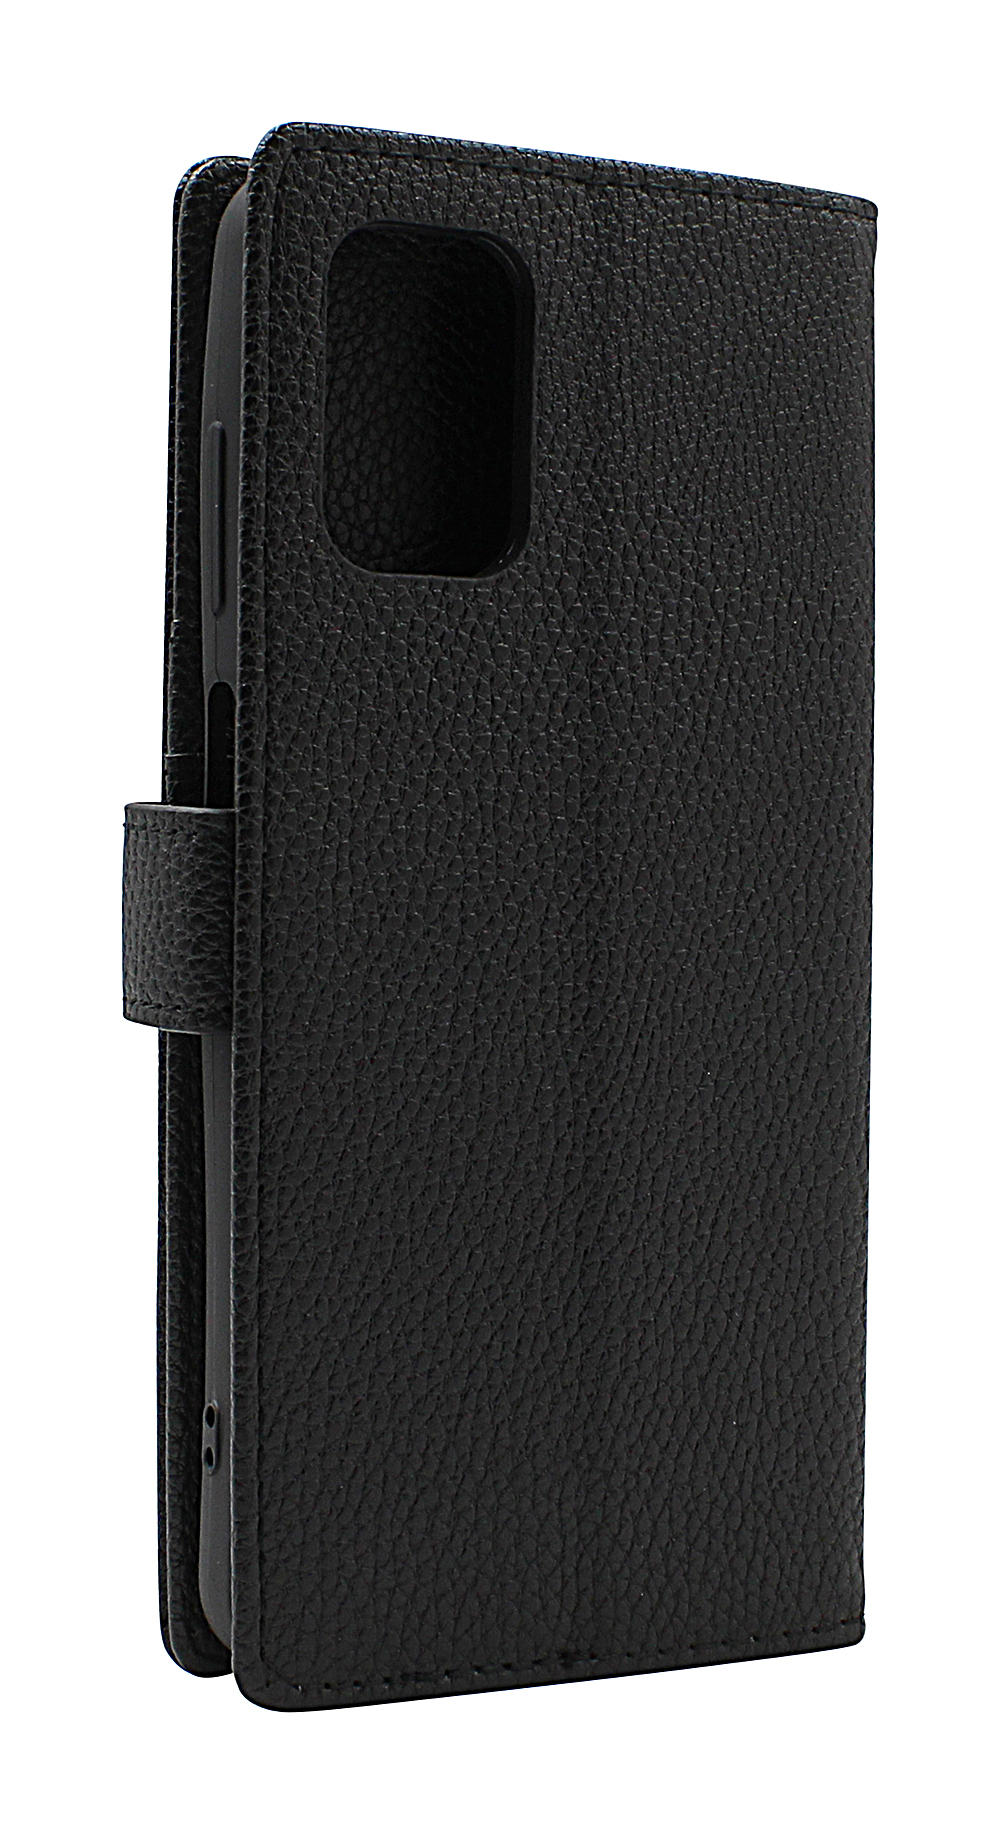 New Standcase Wallet Nokia G60 5G